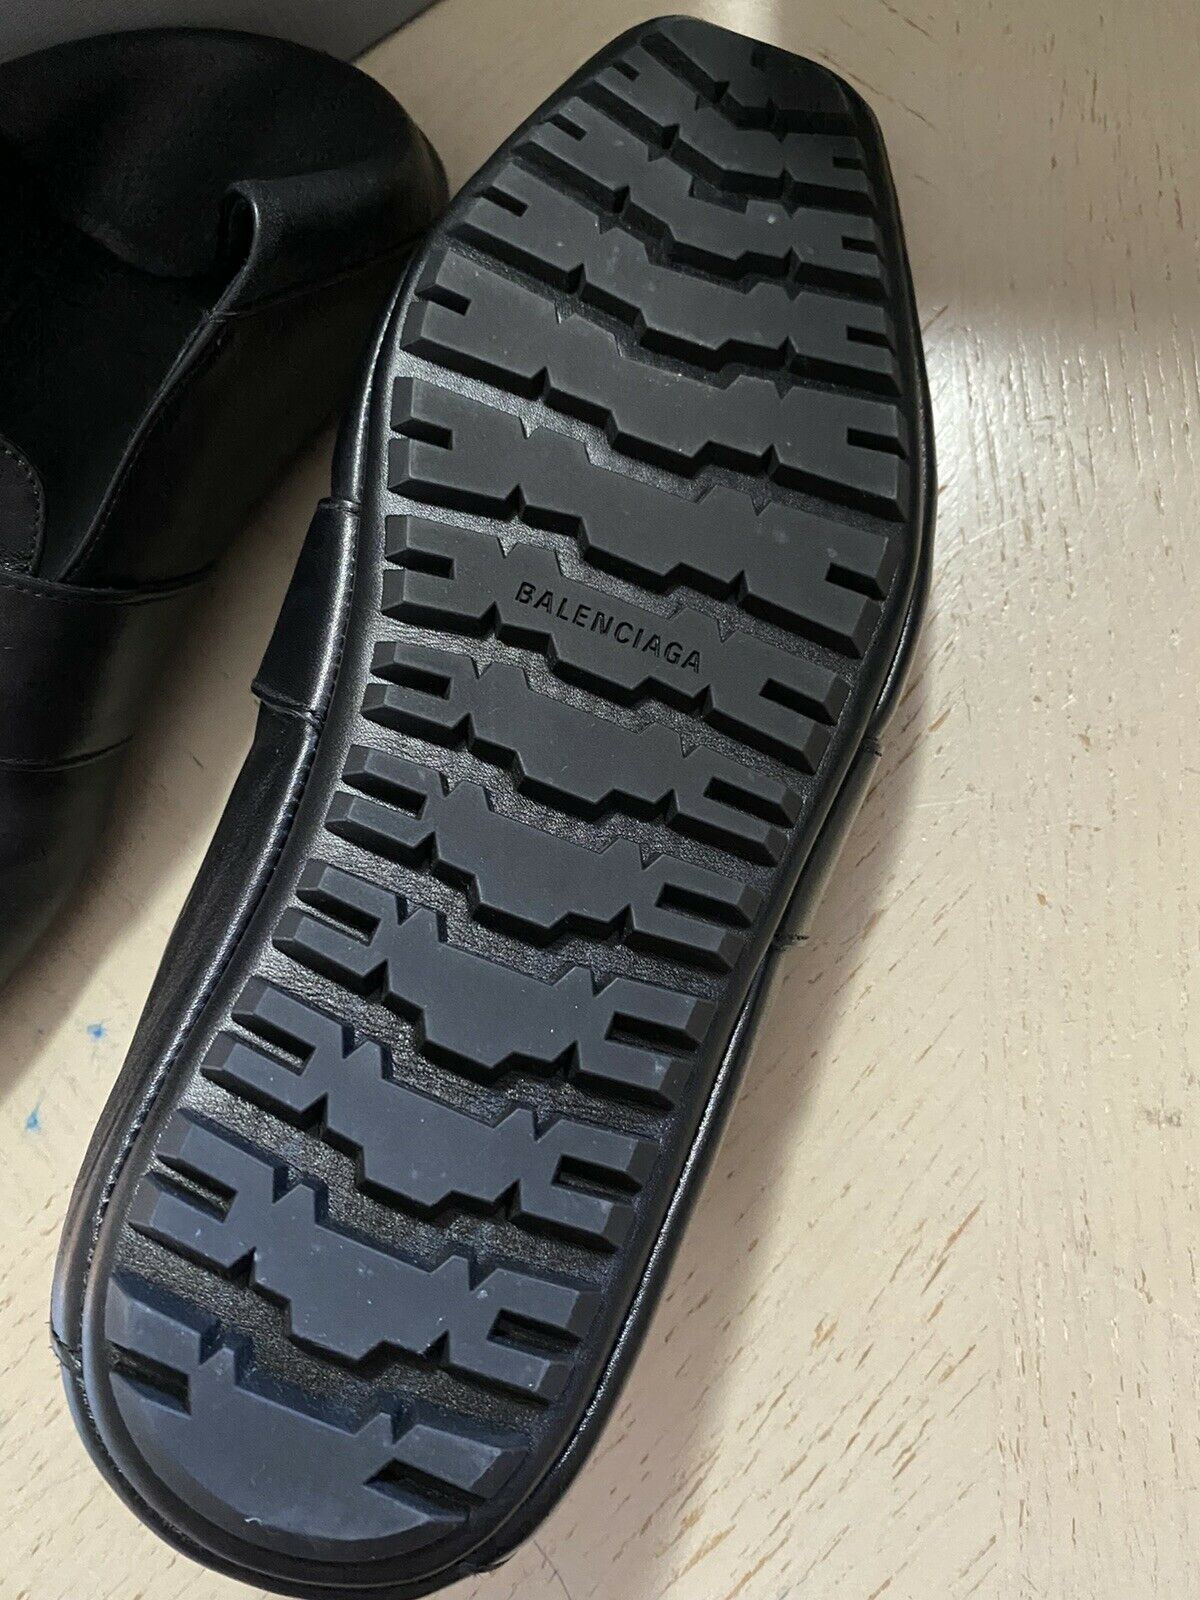 New $750 Balenciaga Iconic Moccasin Leather Loafers Shoes Sandal Black 7 US/40 E